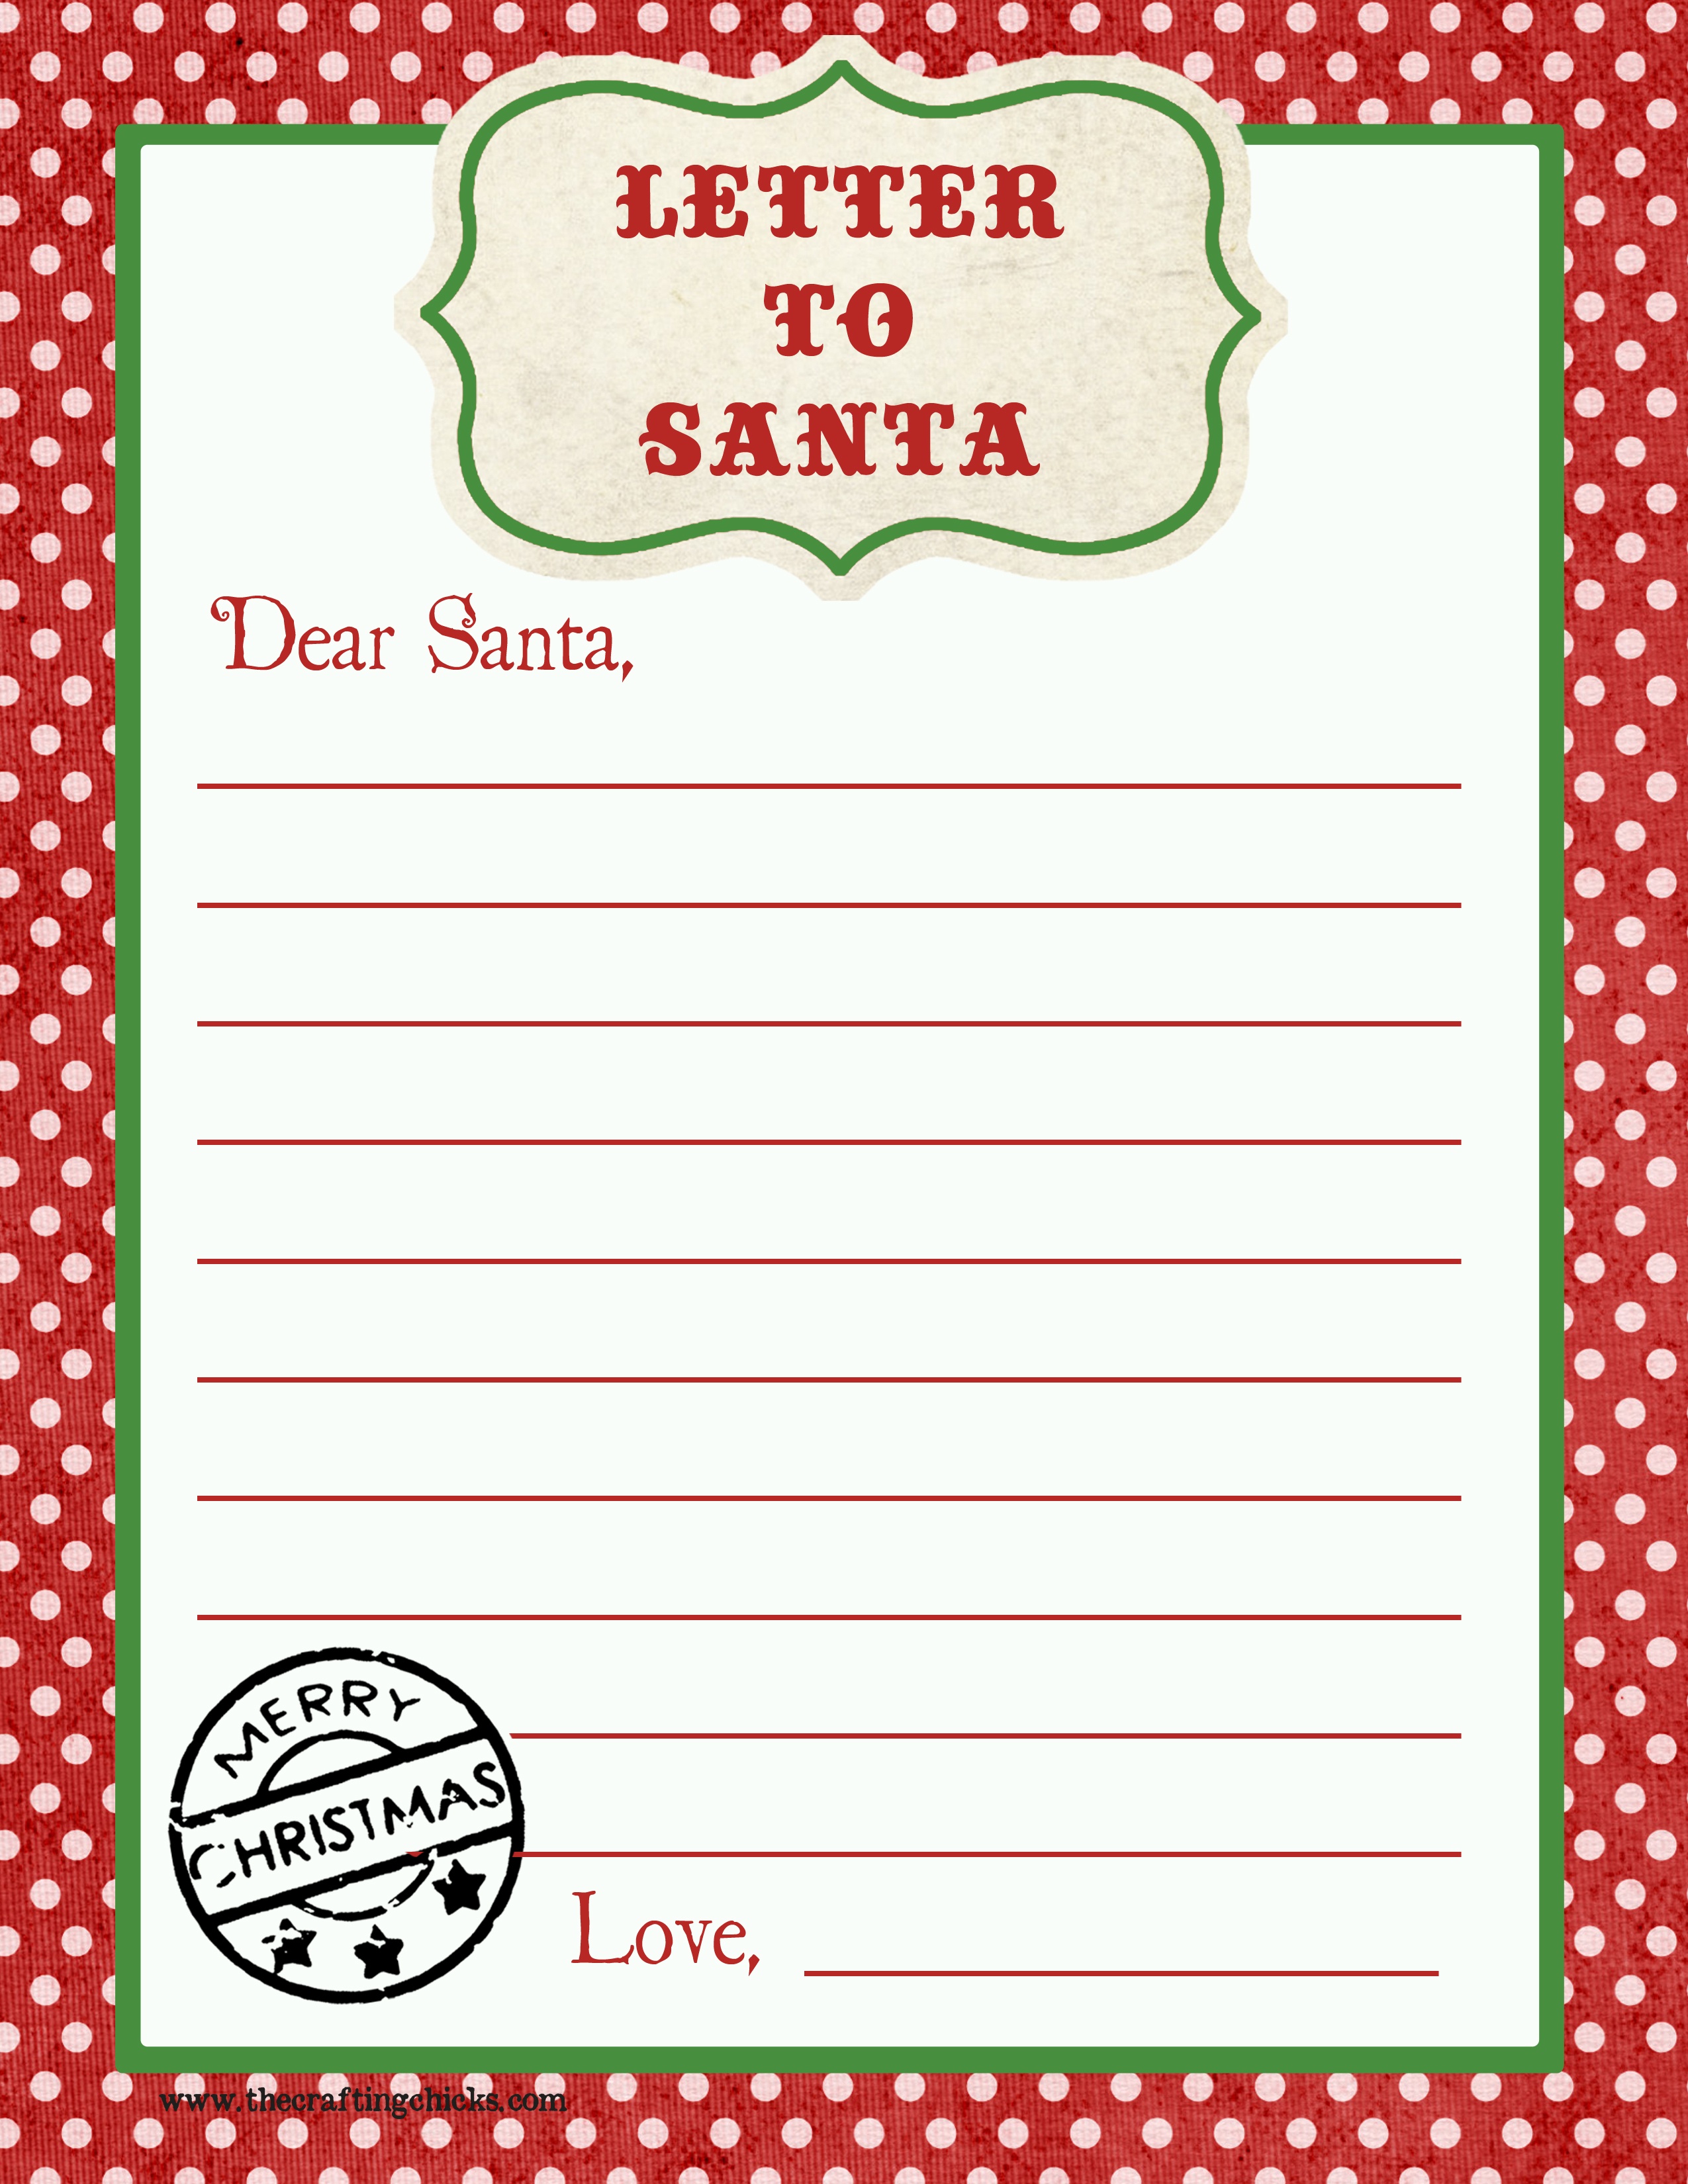 Letter To Santa Free Printable Download - Free Printable Dear Santa Stationary